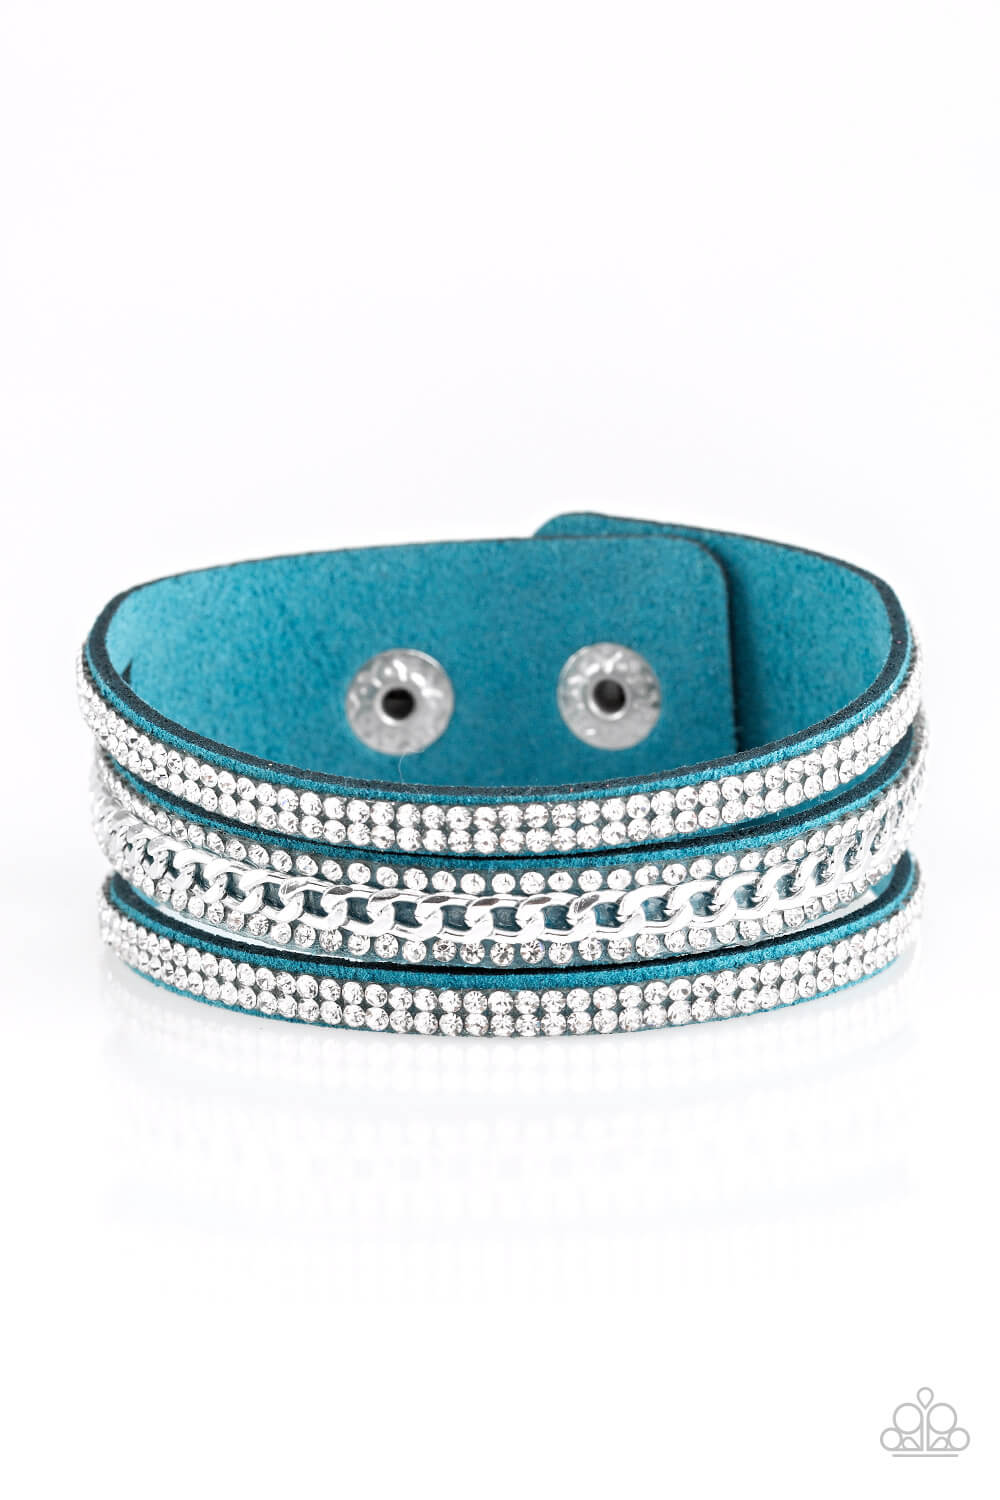 Rollin In Rhinestones - Blue Bracelet - Princess Glam Shop